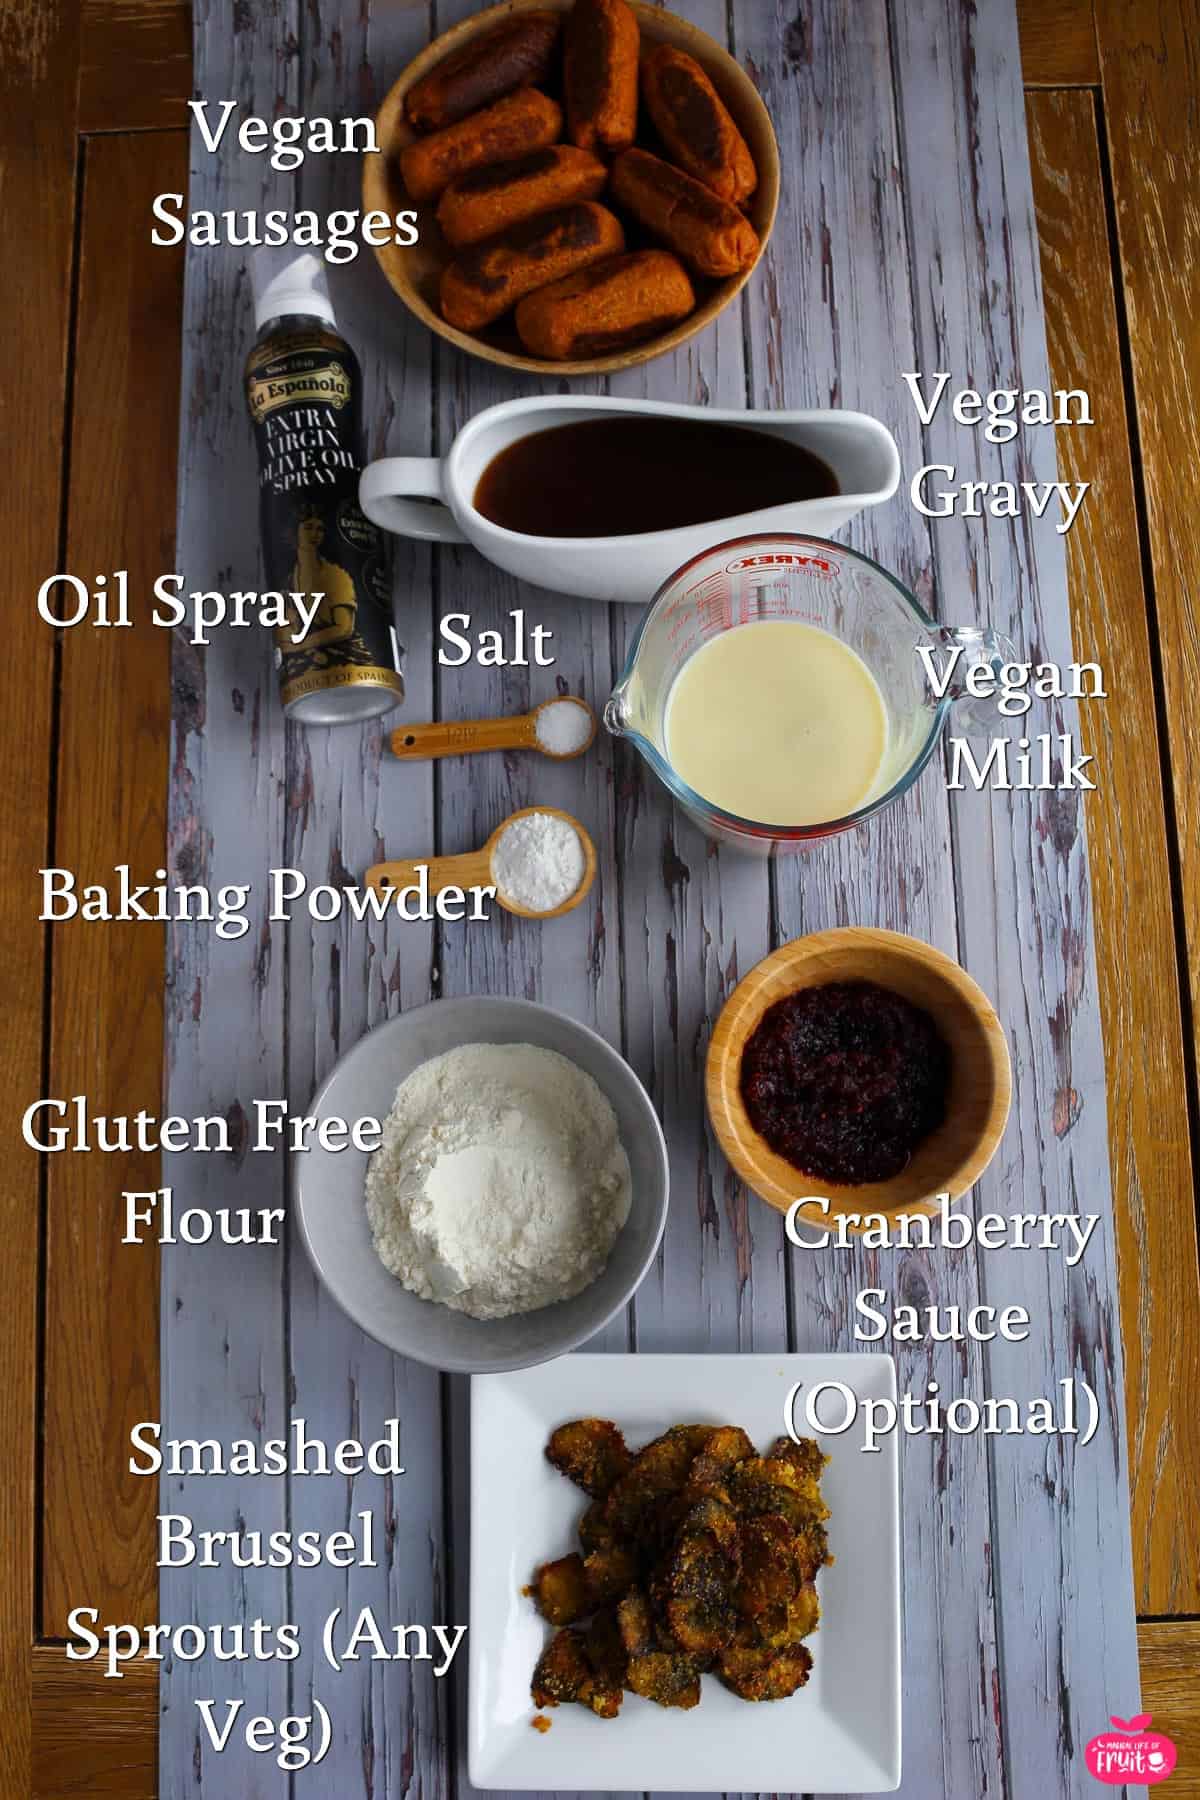 Ingredients for Vegan Yorkshire Pudding Wrap Recipe, vegan sausage, vegan gravy, vegan milk, cranberry sauce, brussels sprouts, gluten free flour, baking powder, salt, oil spray